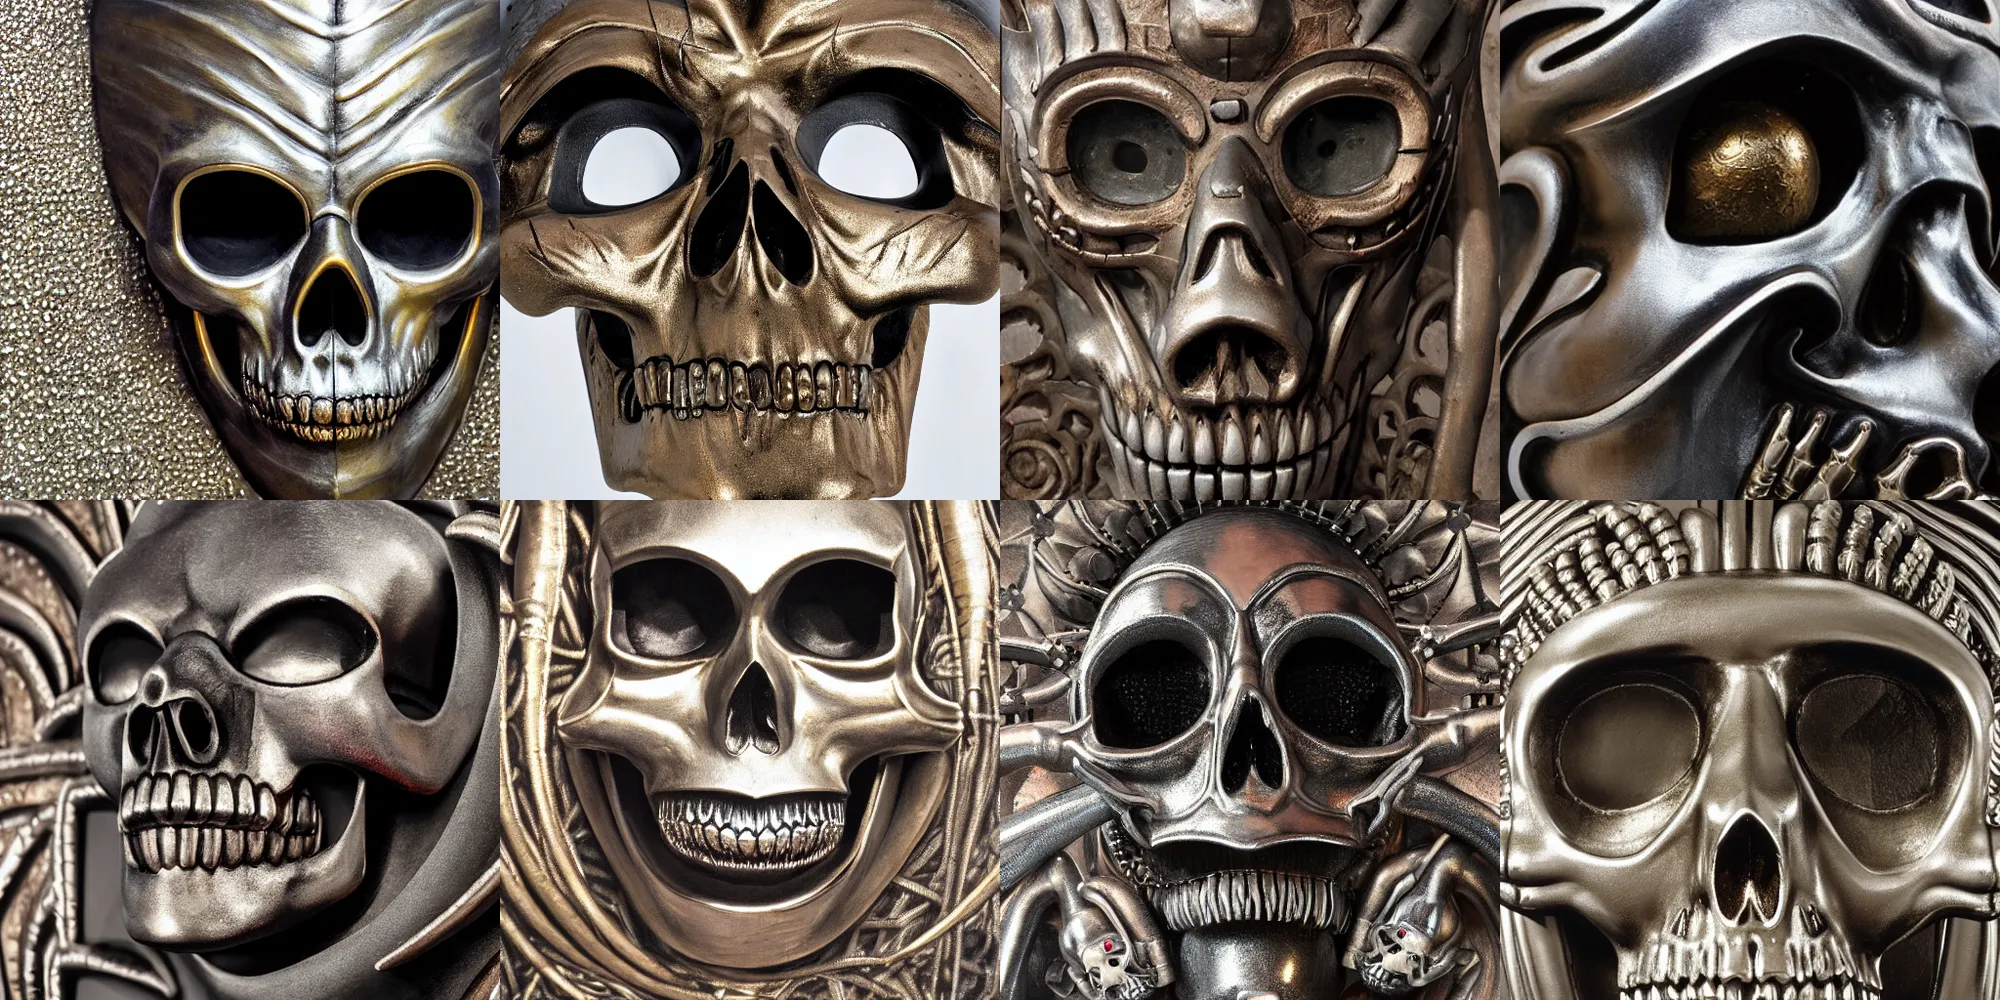 Prompt: closeup of metalic mural, carnaval mask, skull, by giger, h.r giger, hr giger, highly detailed,soft lighting, film grain, medium format, 8k resolution, oil on canvas